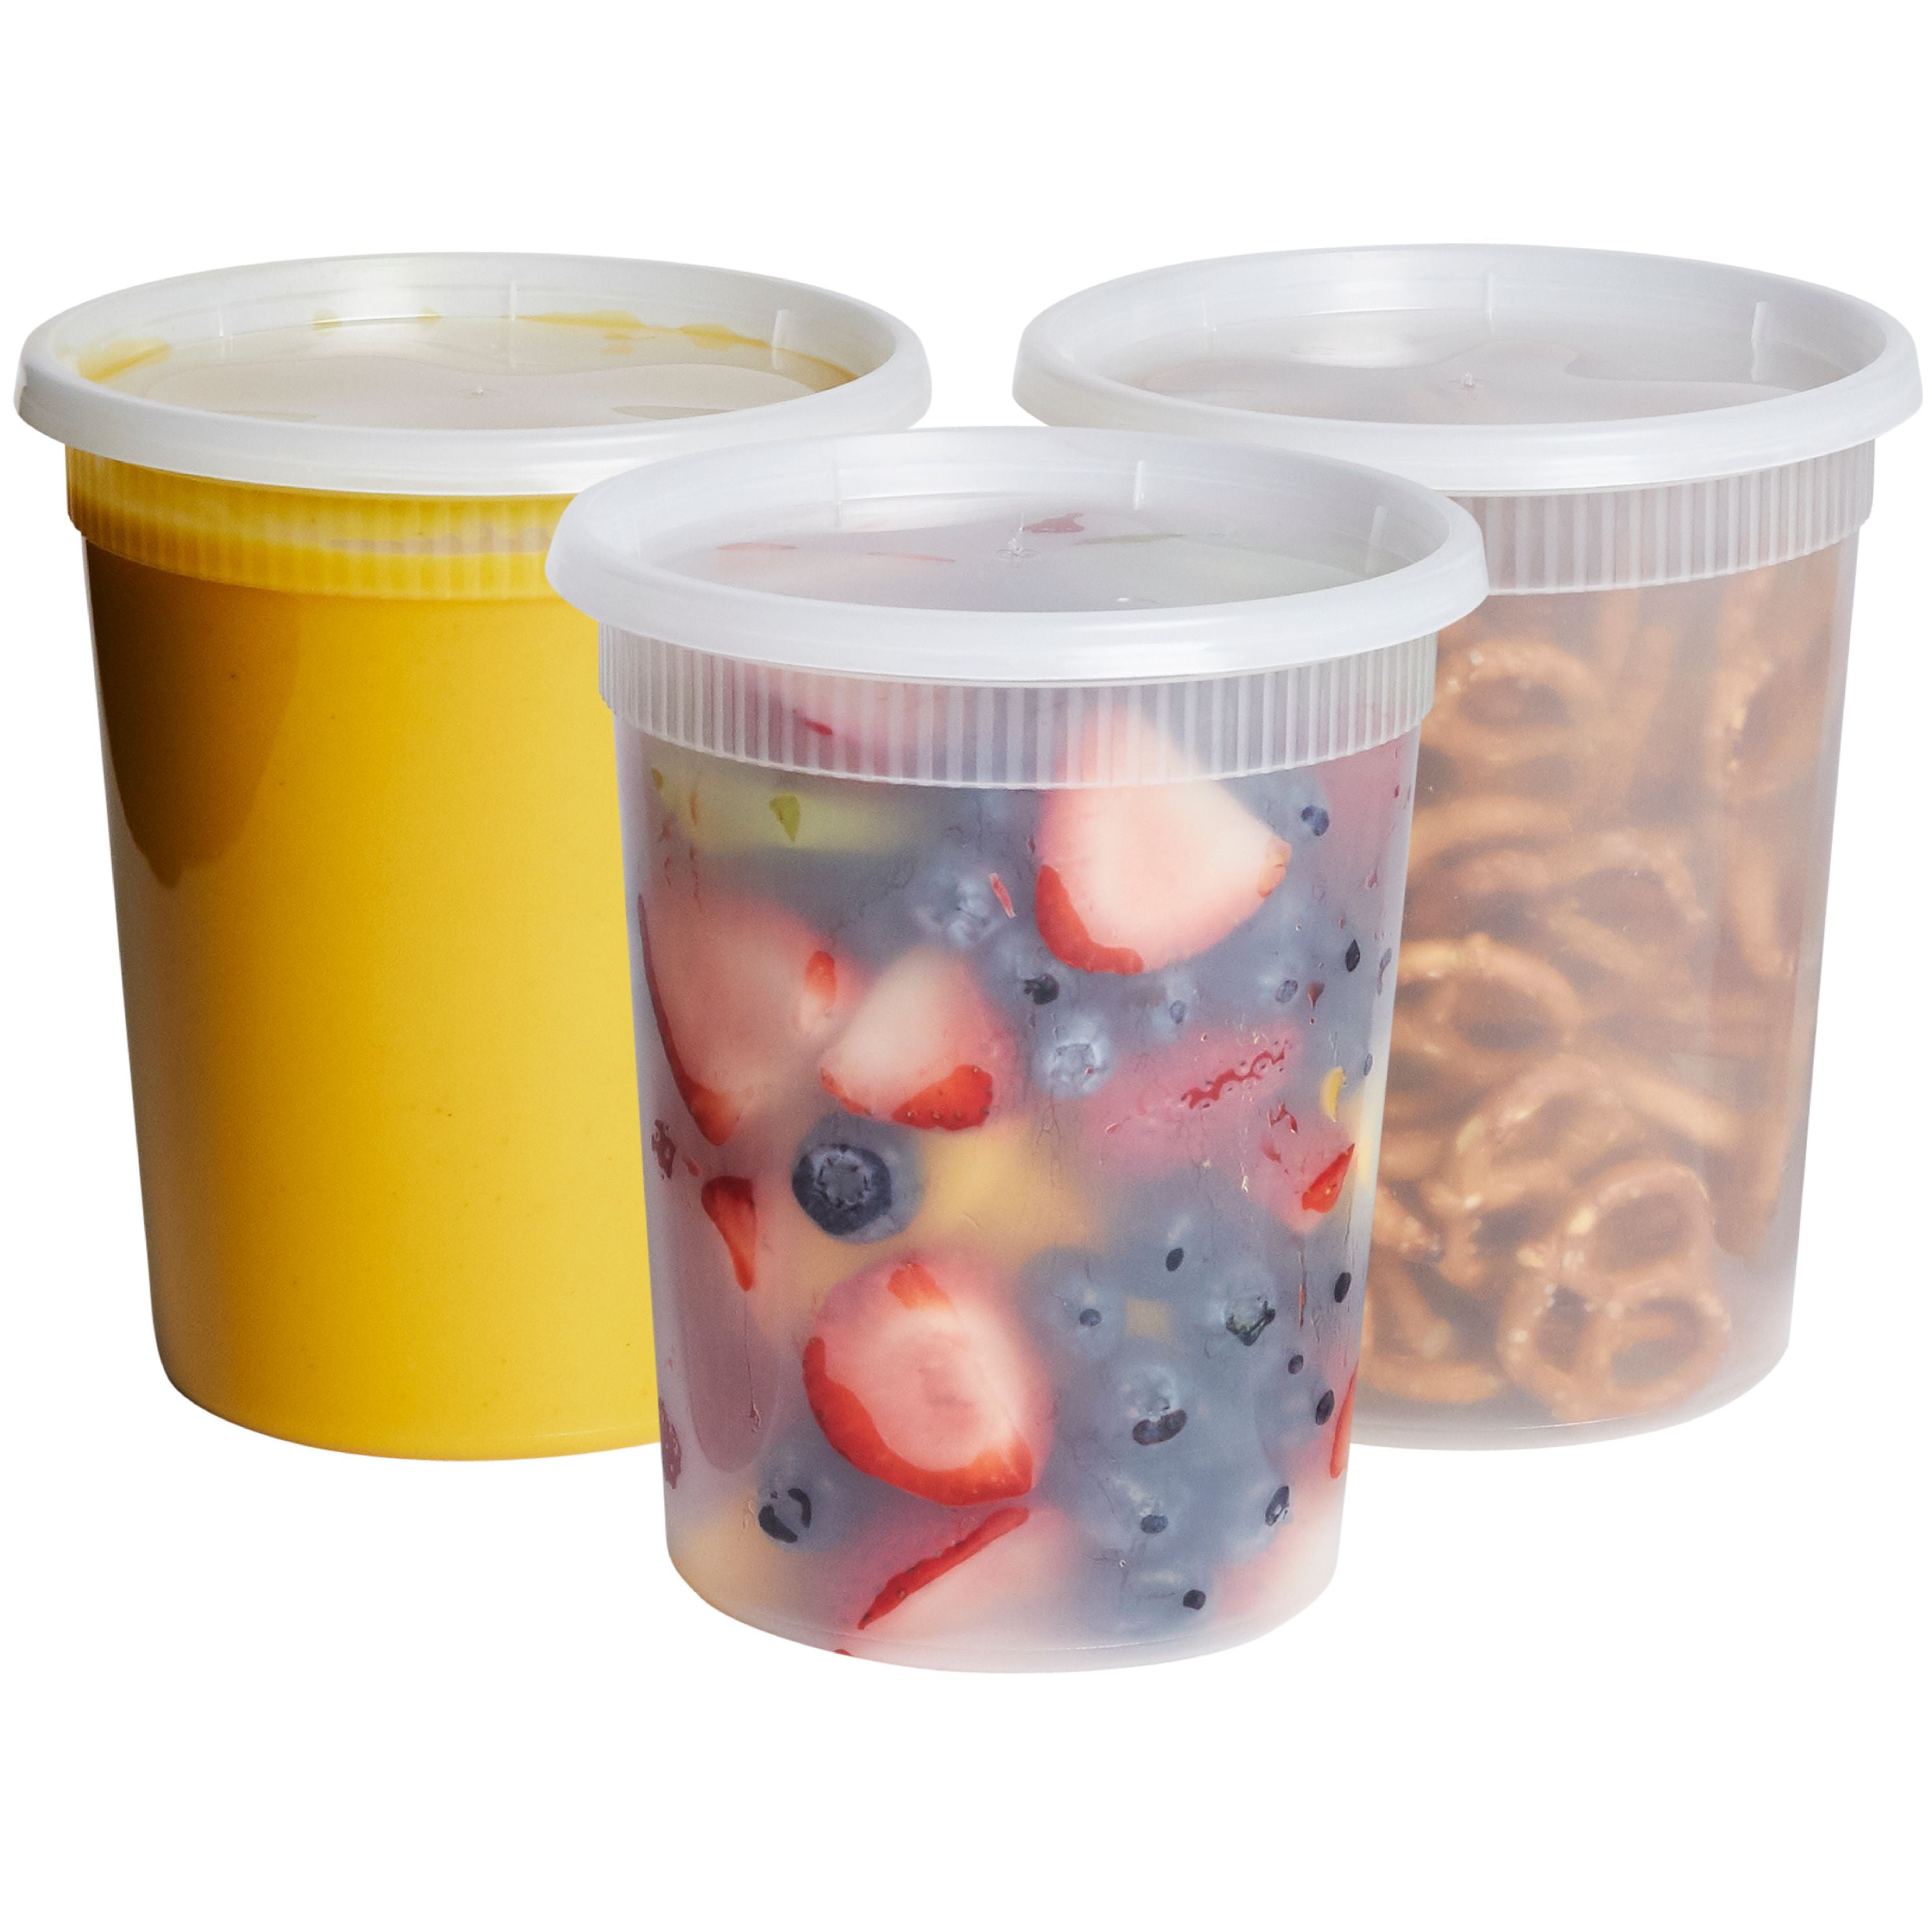 8oz 12oz 16oz 24oz 32oz Round Plastic Deli Food Containers with Lids FREE SHIP 